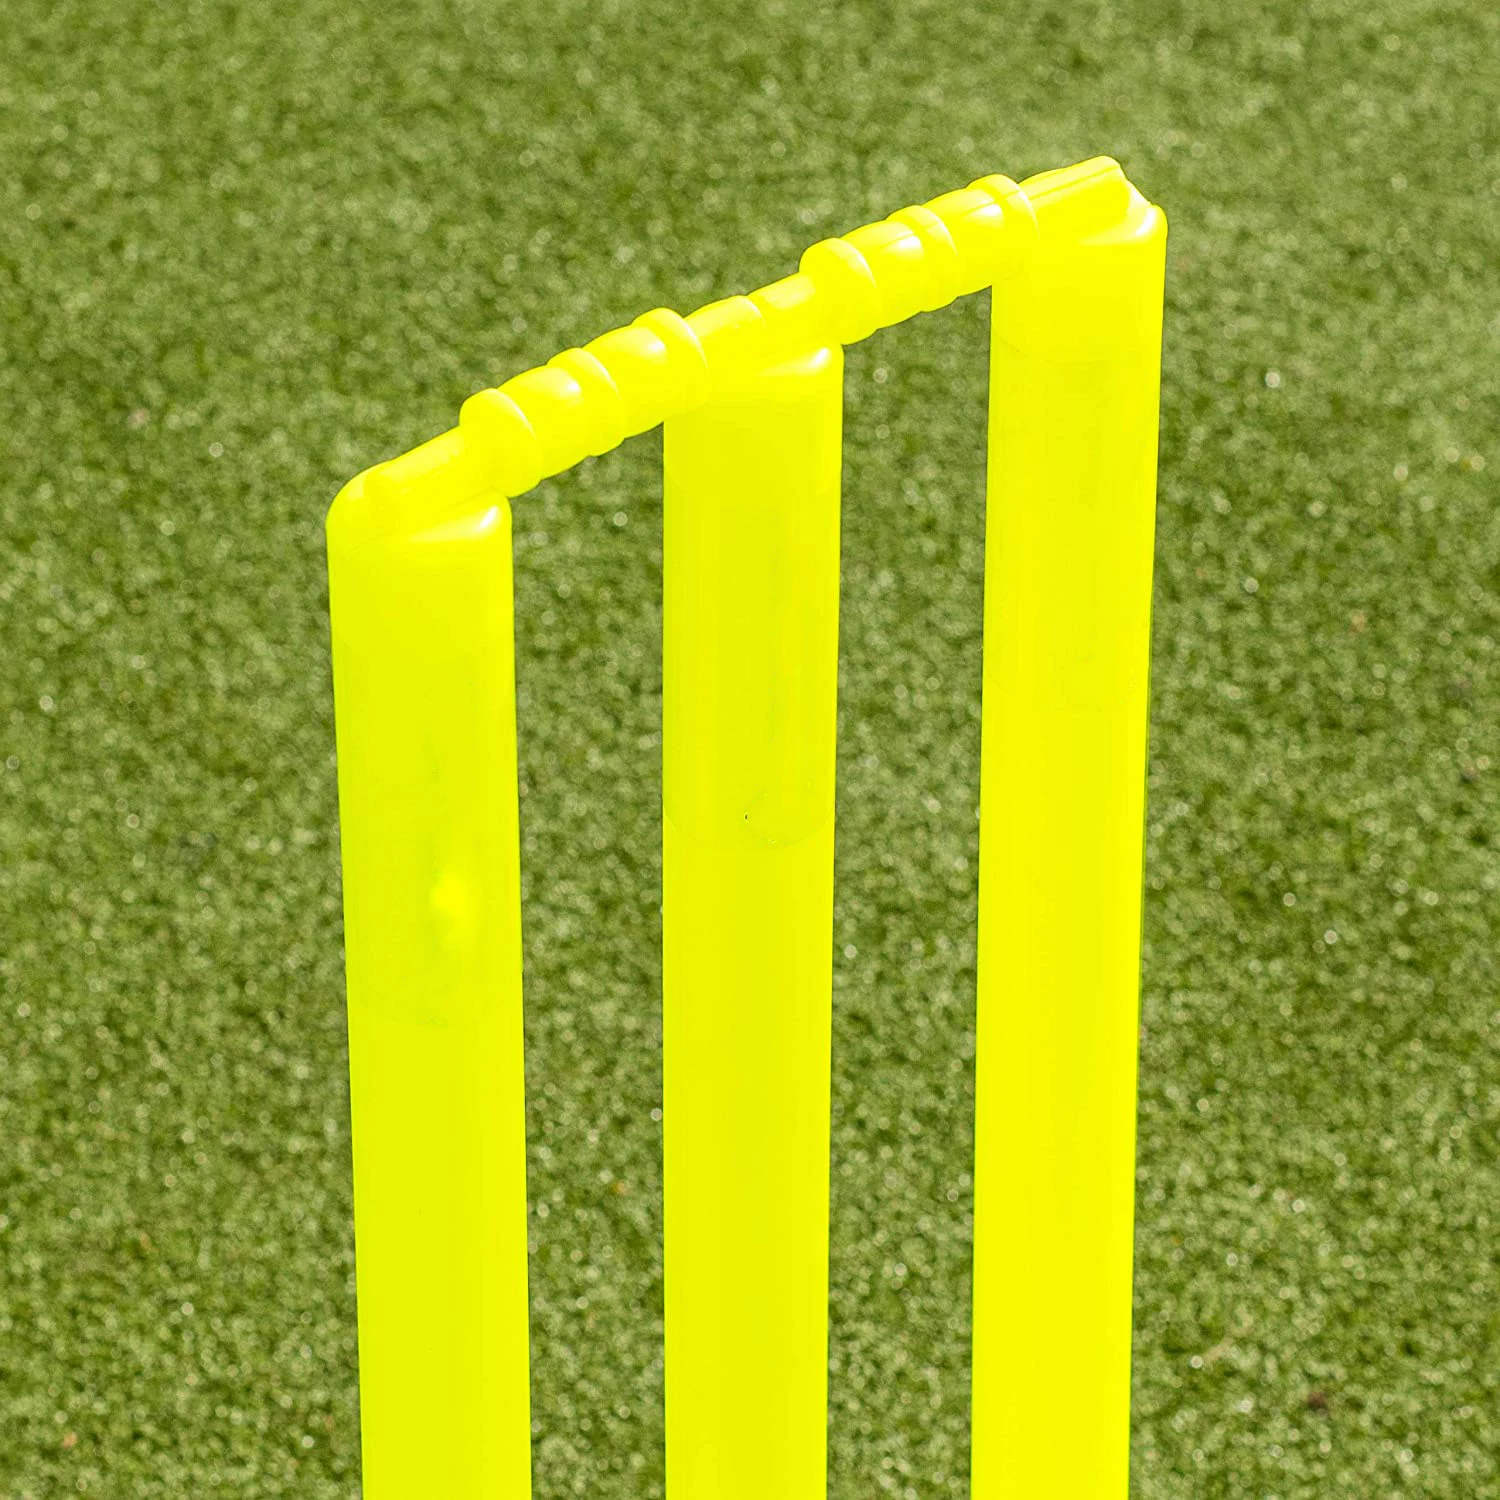 Cricket Stumps - Rubber Base Cricket Wickets  Junior & Senior Stumps Springback Plastic Cricket Stumps